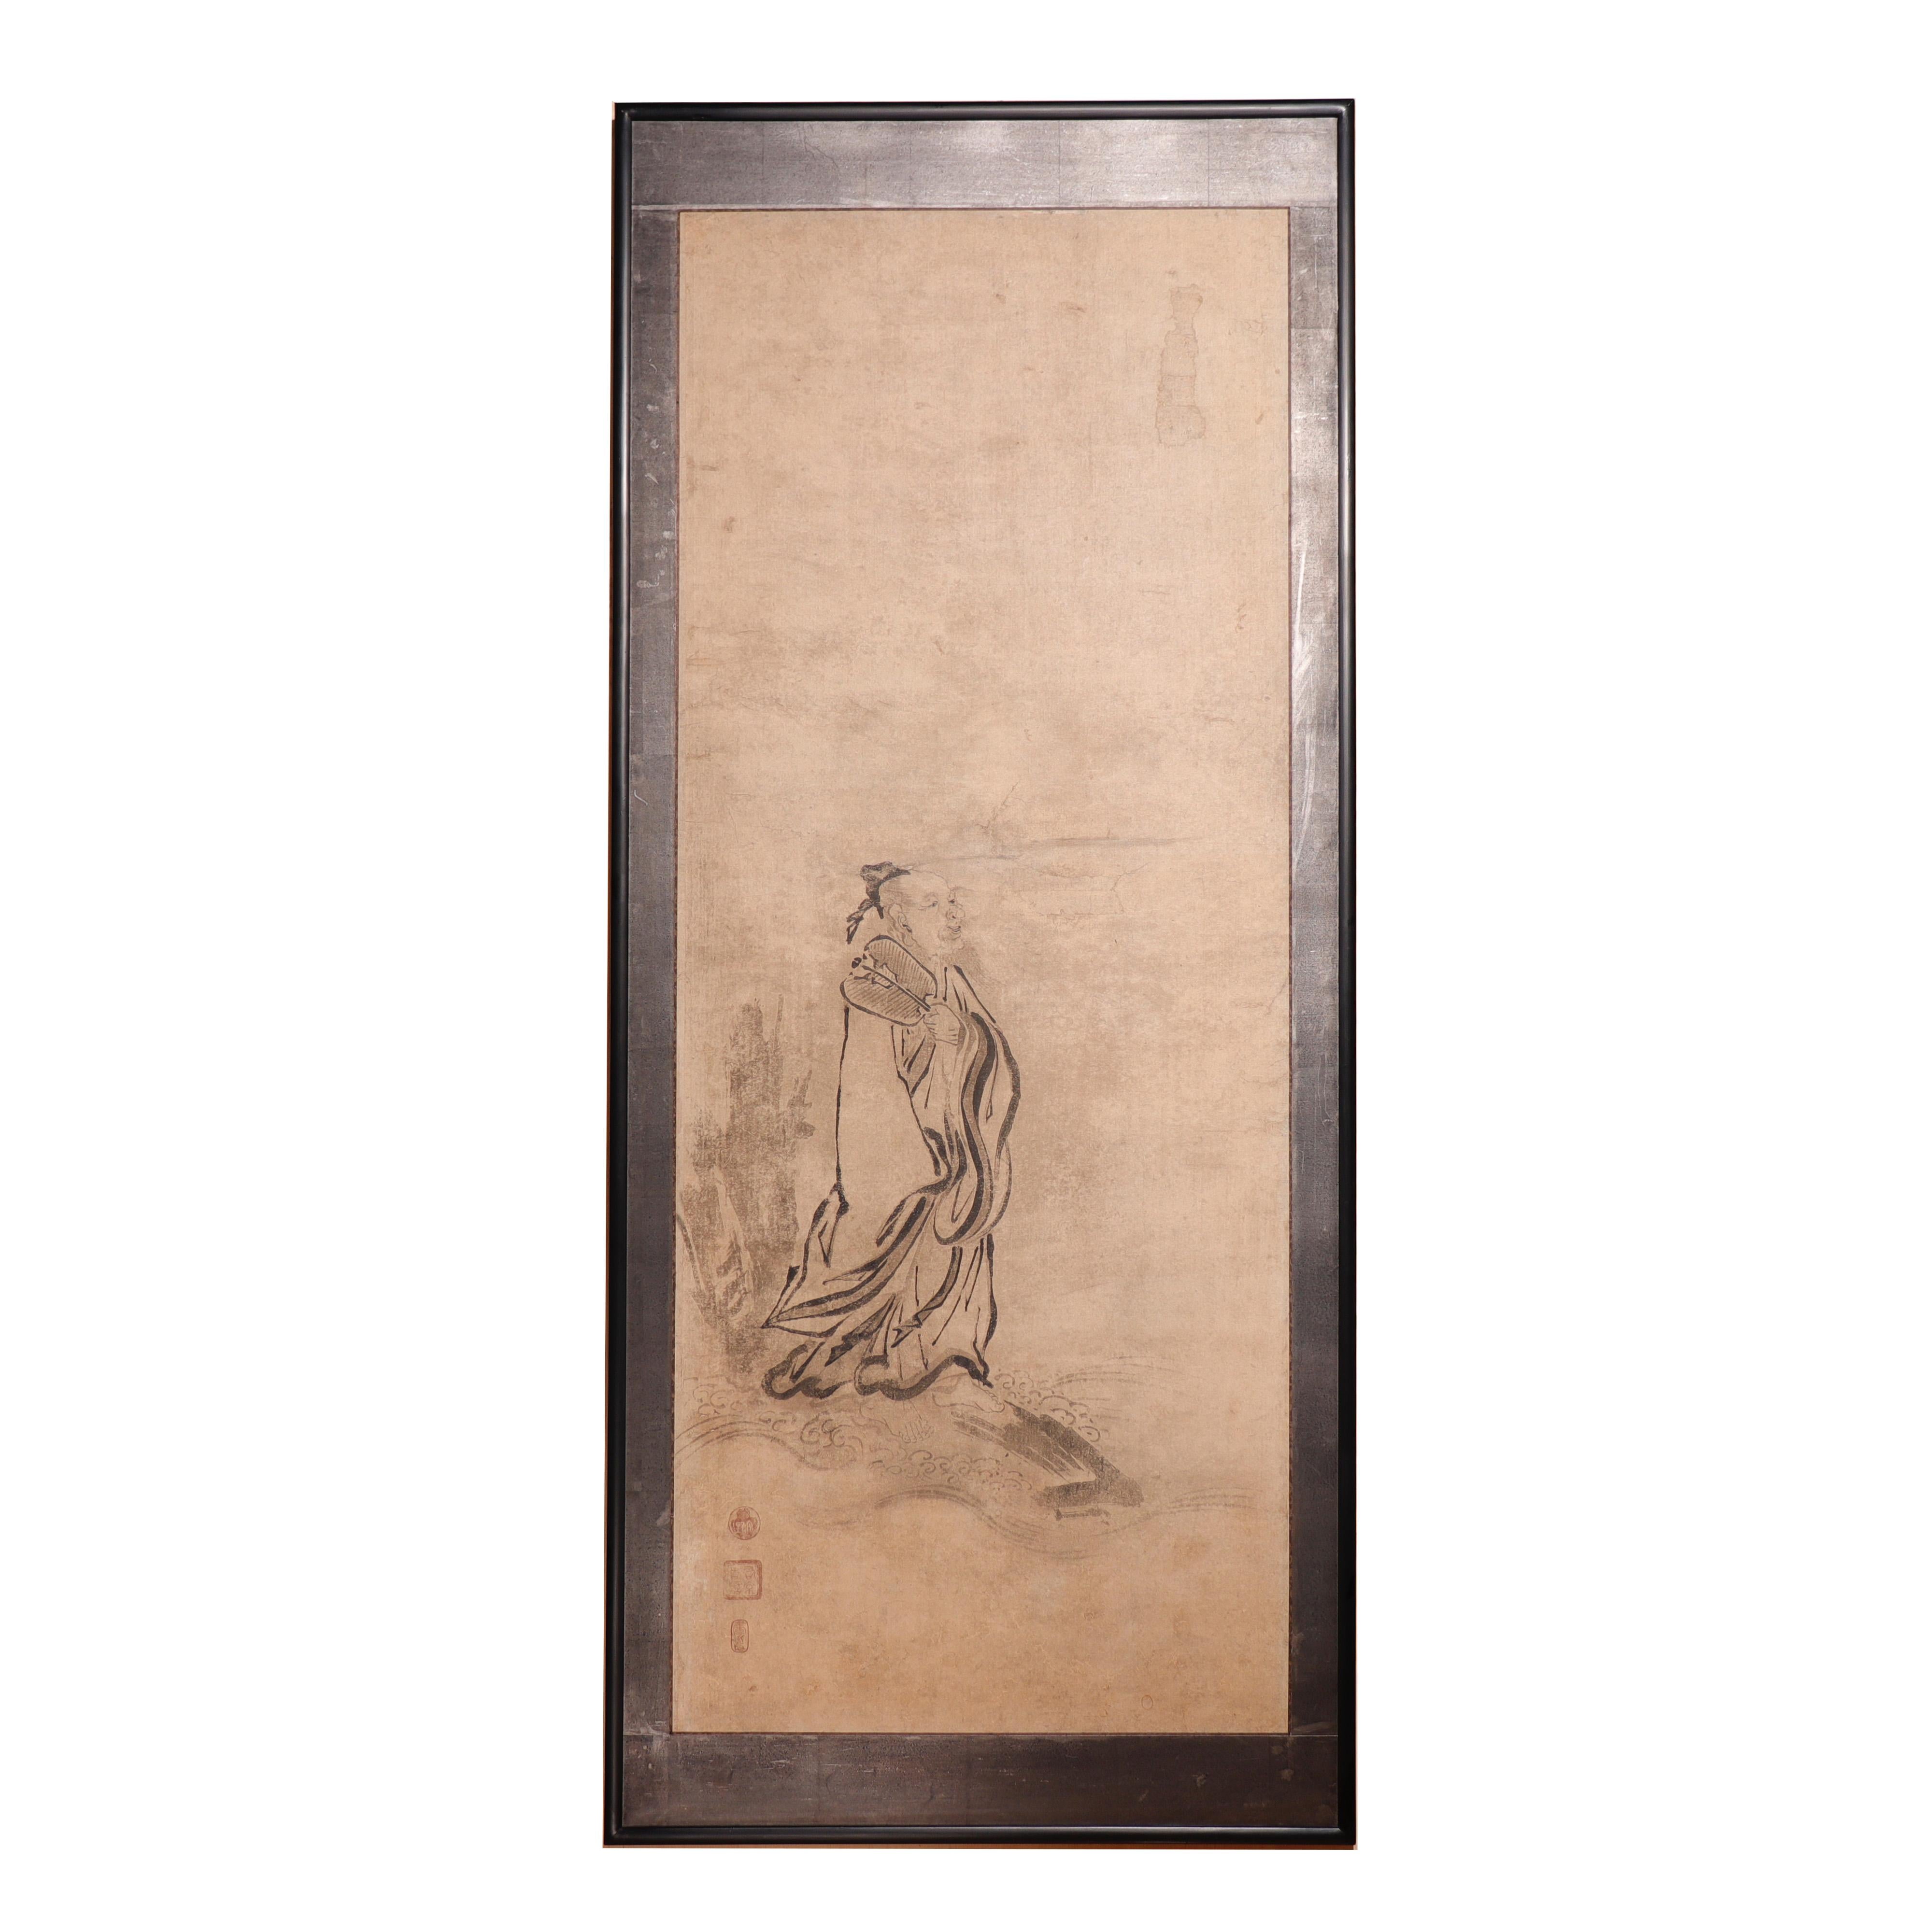 Paper Set of Four Japanese Suibokuga Ink Paintings by Kano Tokinobu, 17th Century For Sale